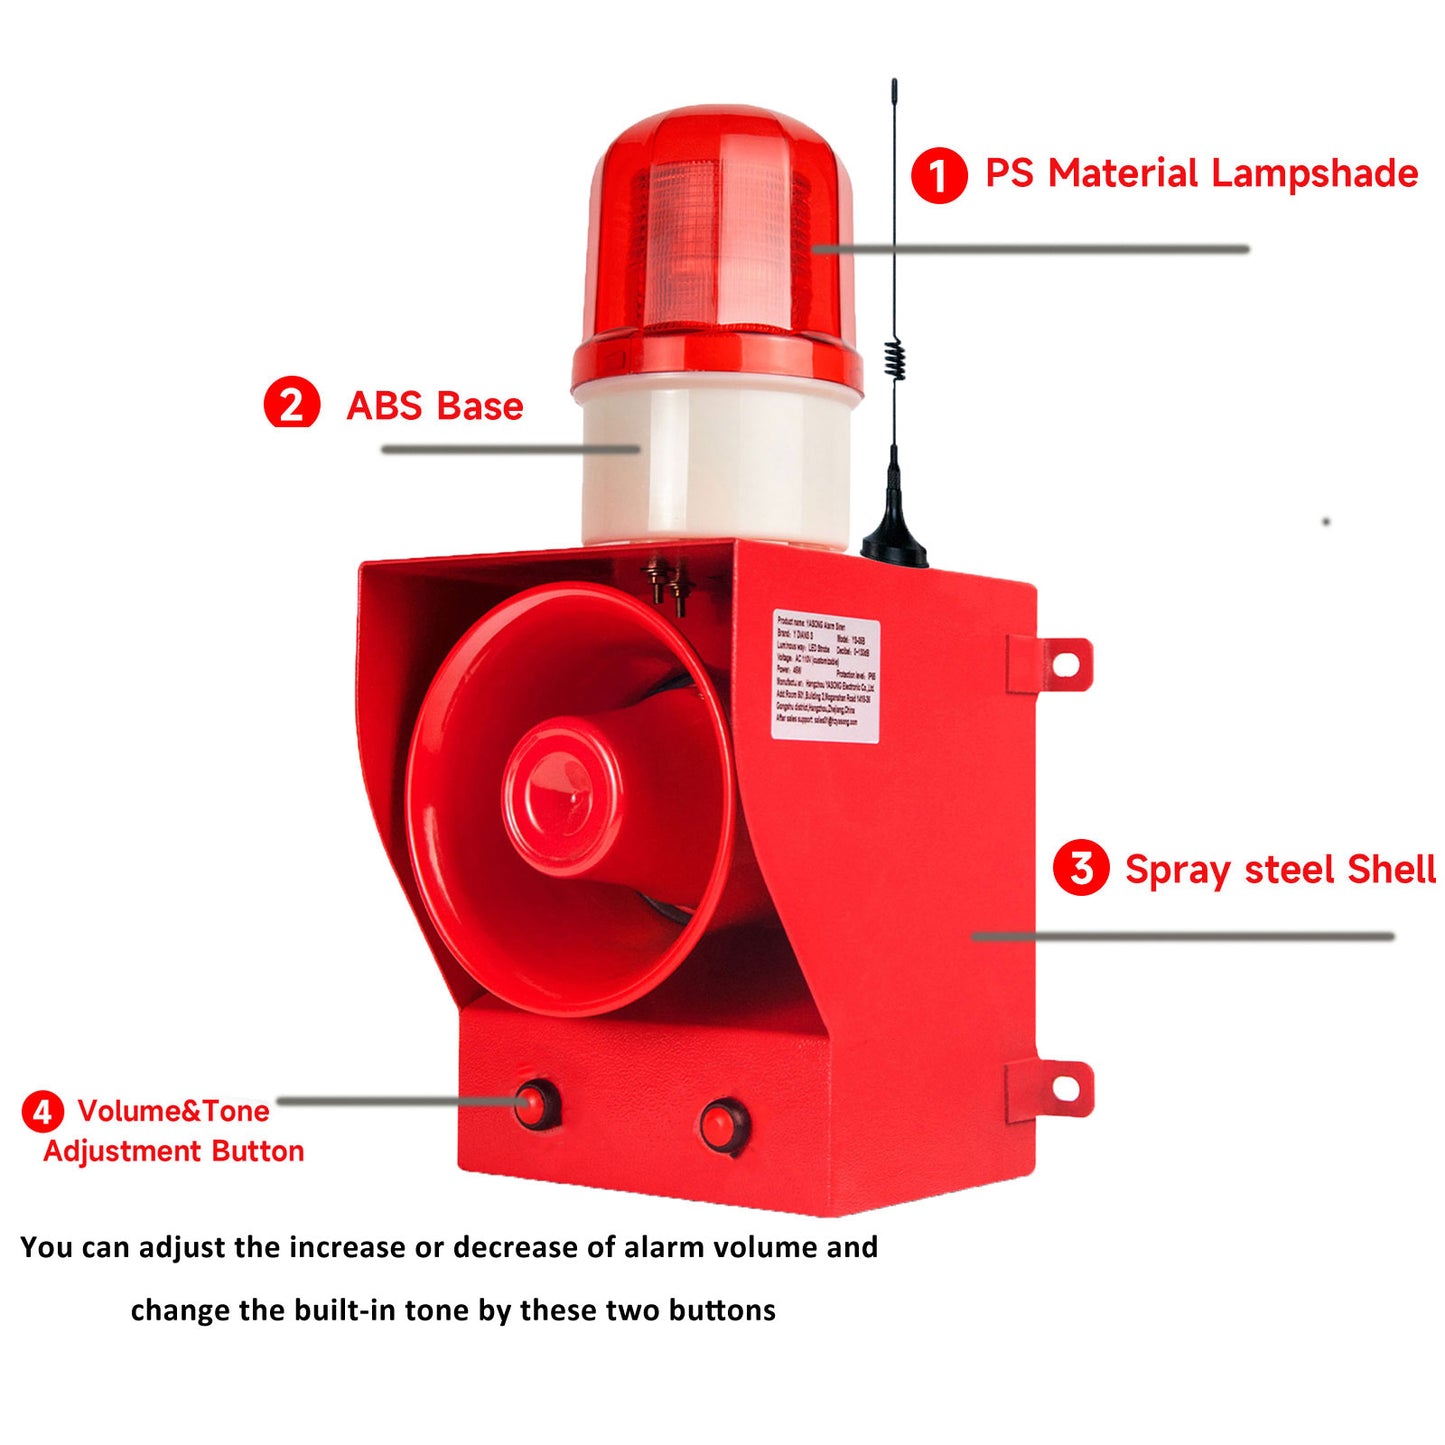 YASONG 500m Wireless Remote Control Siren Alarm Outdoor 130dB Loud Horn Waterproof Industrial Security Siren LED Strobe Warning Light Tone Volume Adjustable SLA-05BY-500-6